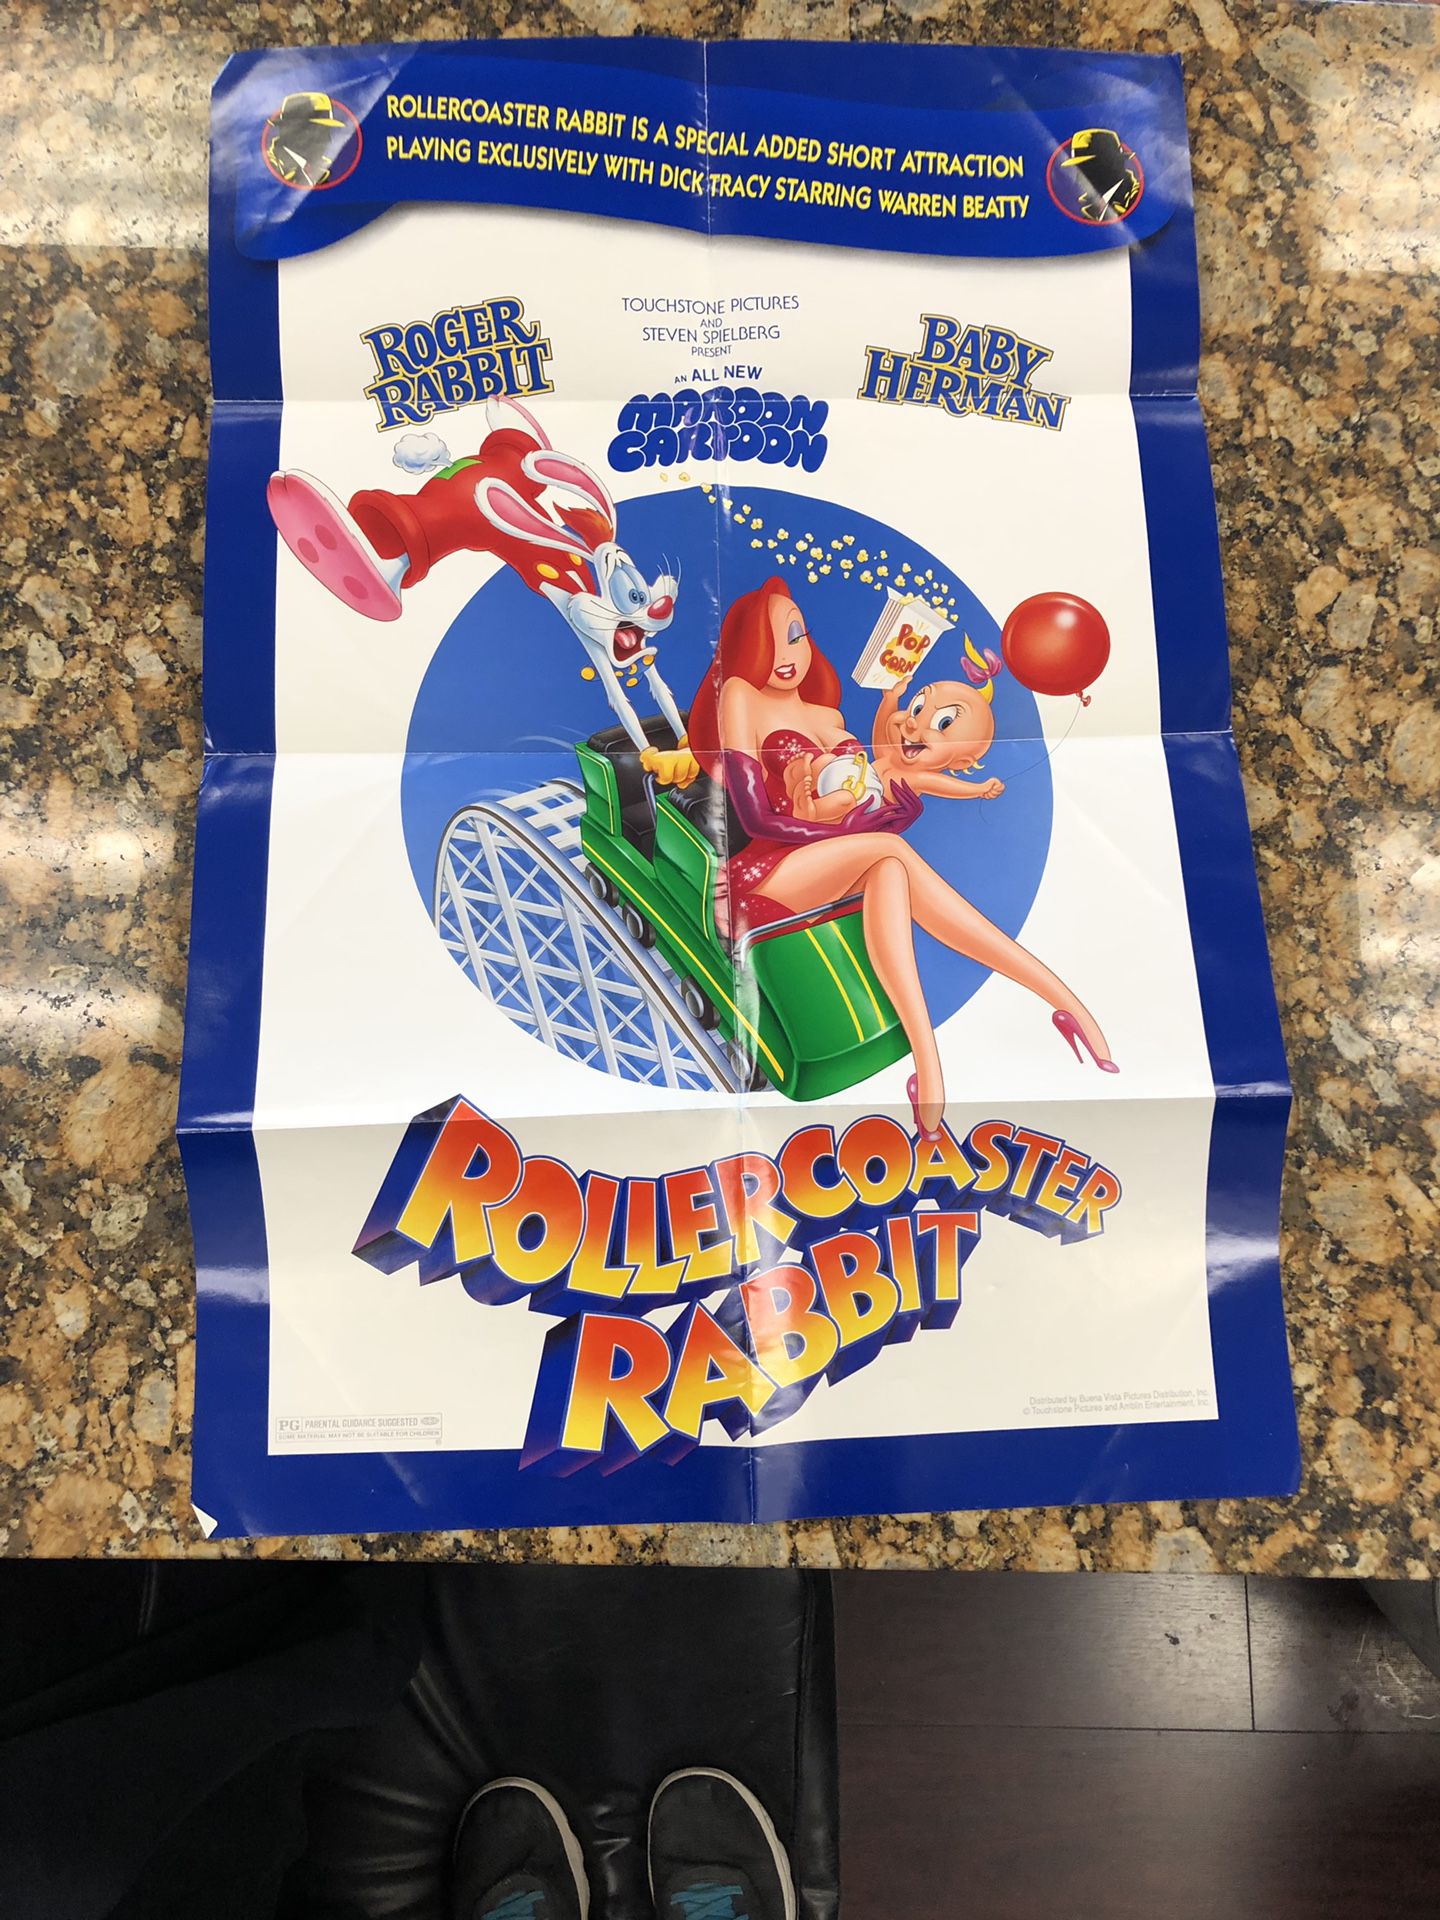 Roller coaster Rodger poster Disney movie